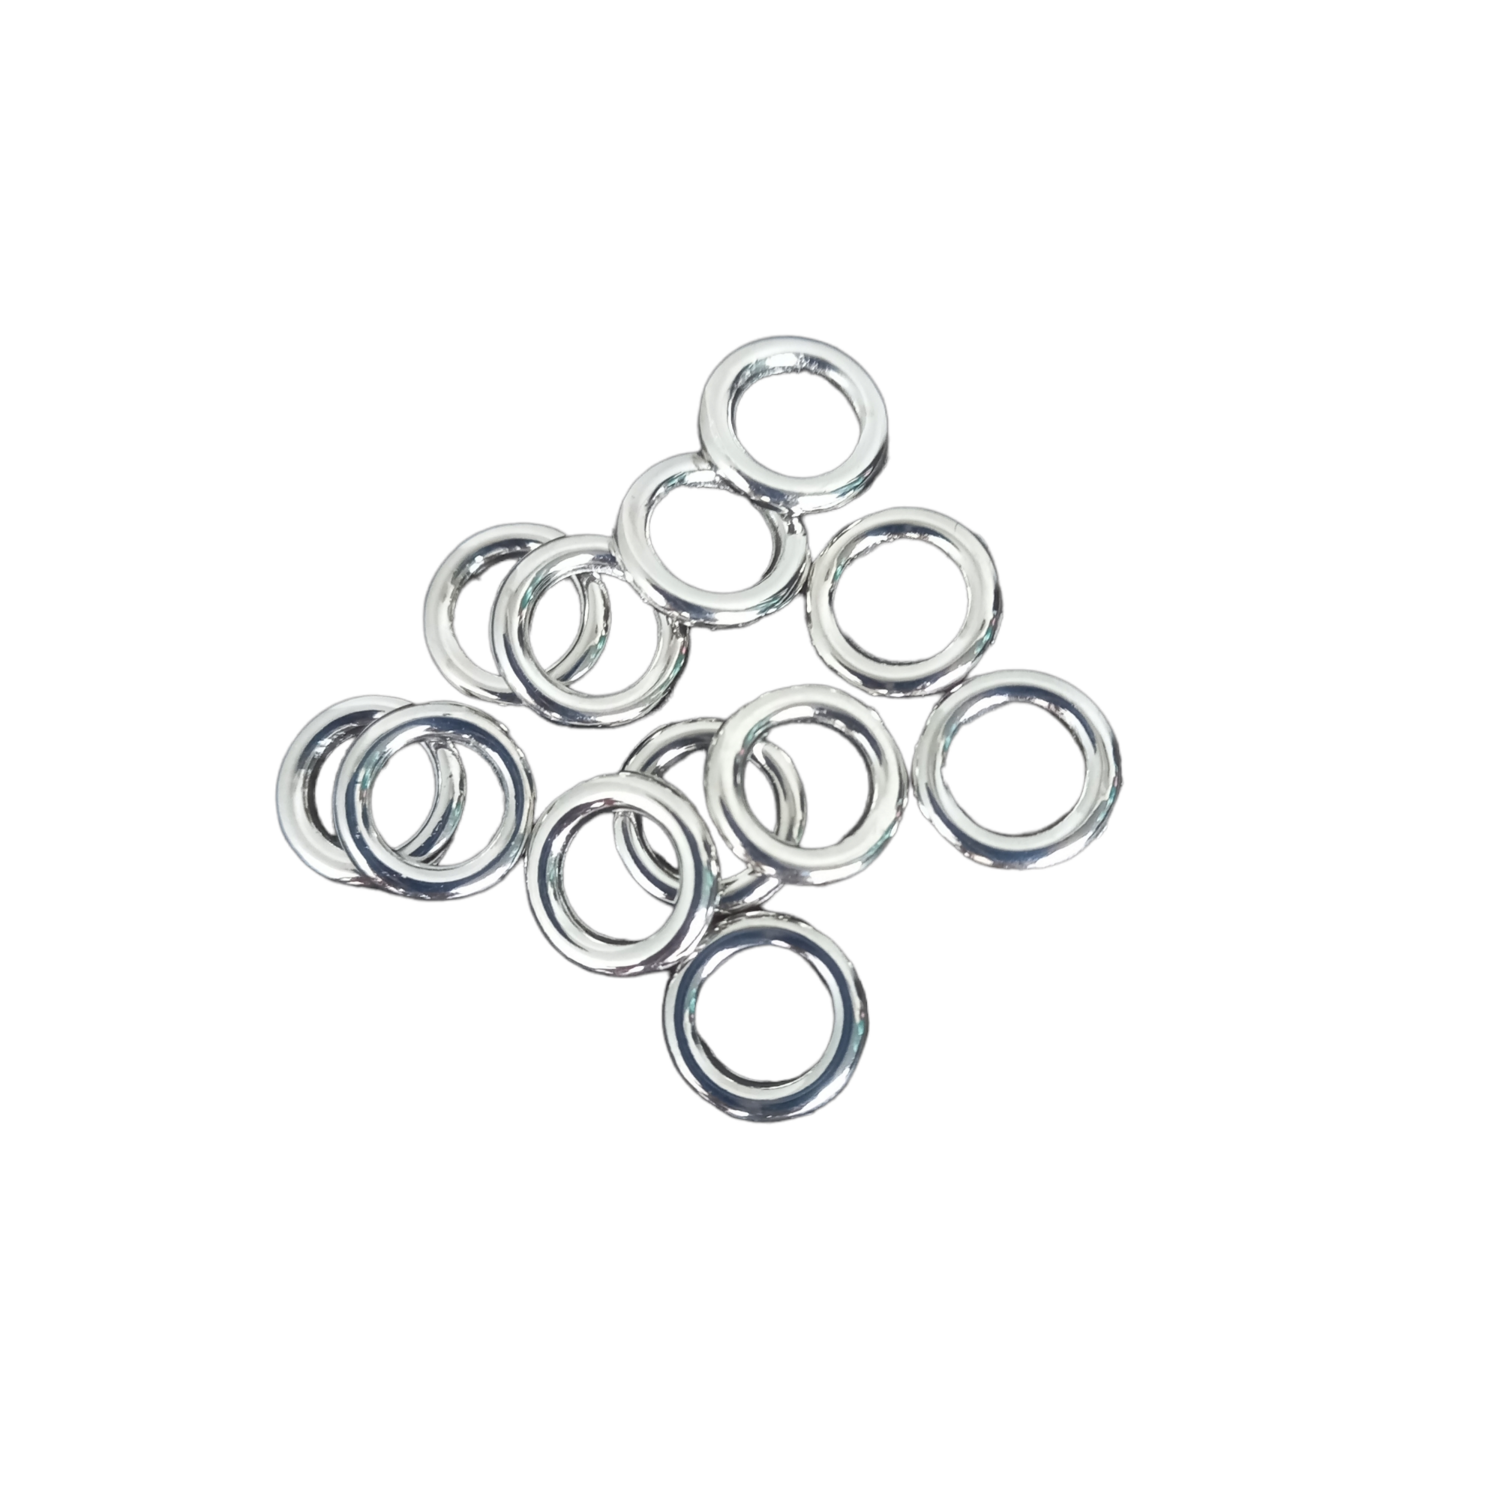 zn-29189: Solid Ring(50pieces)Nickel